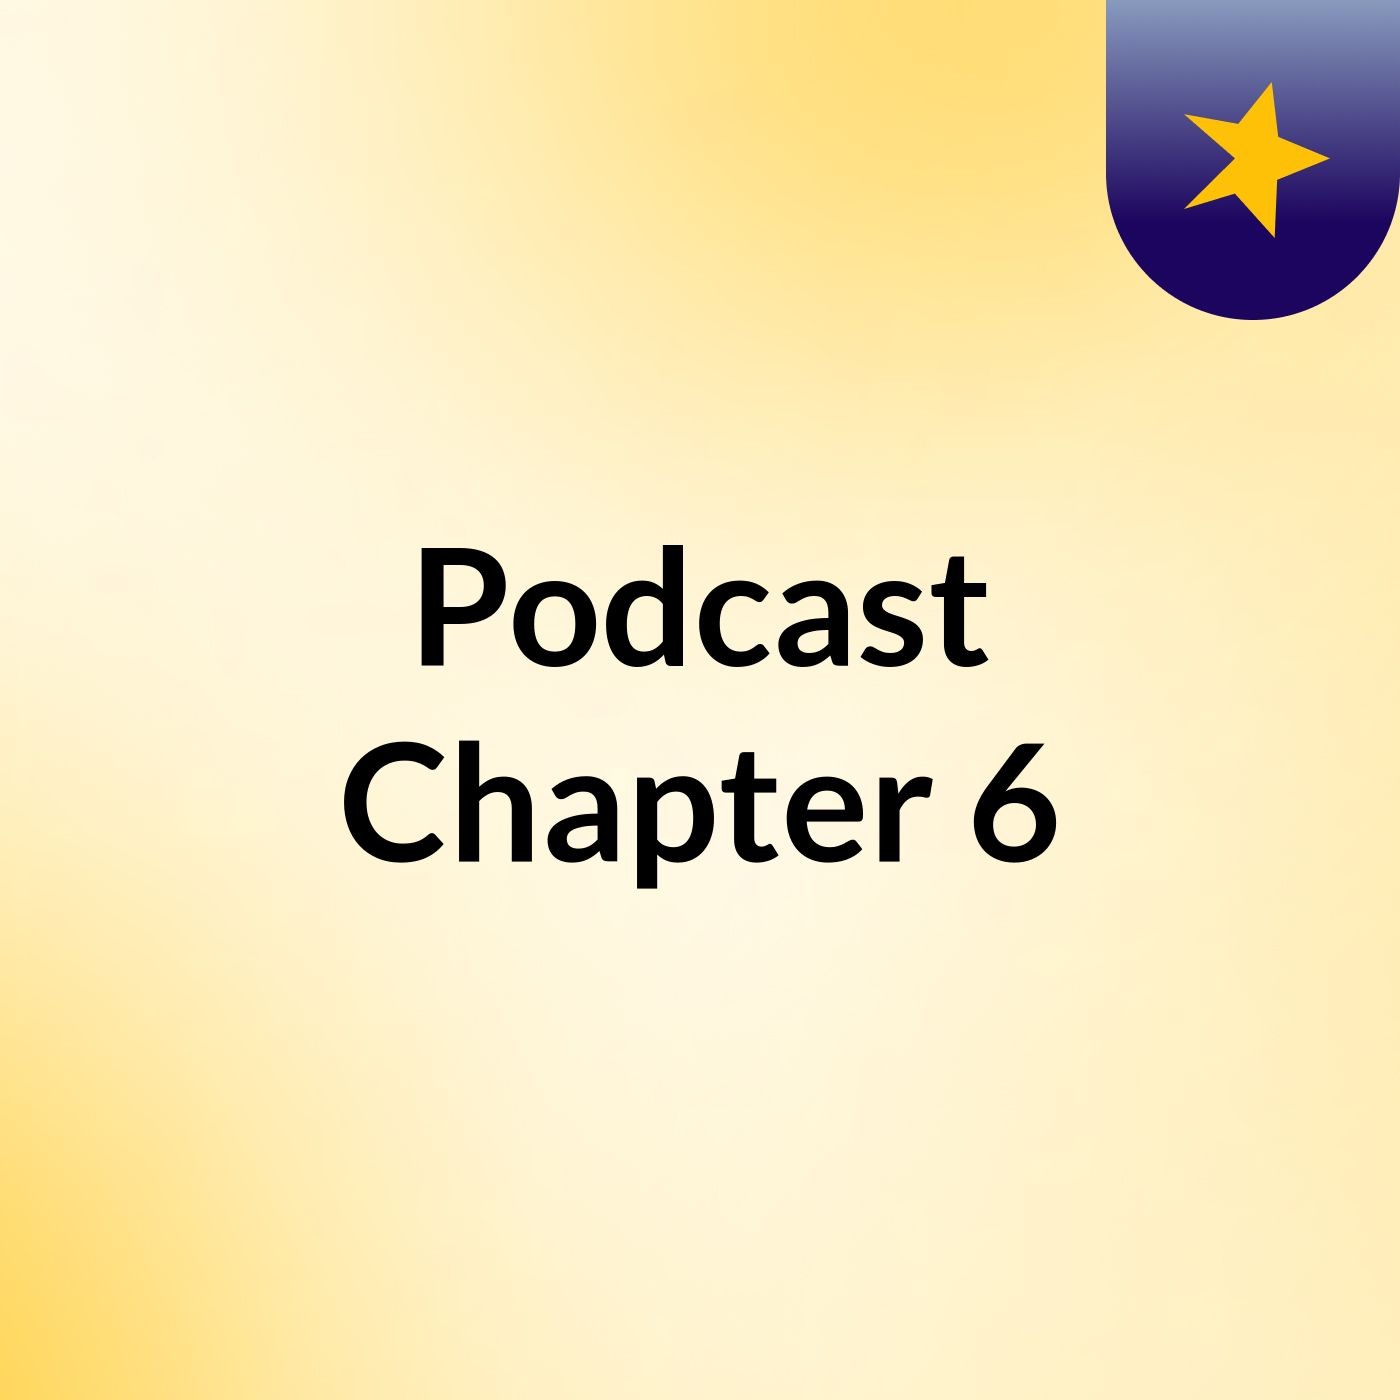 Episodio 4 - Podcast Chapter 6